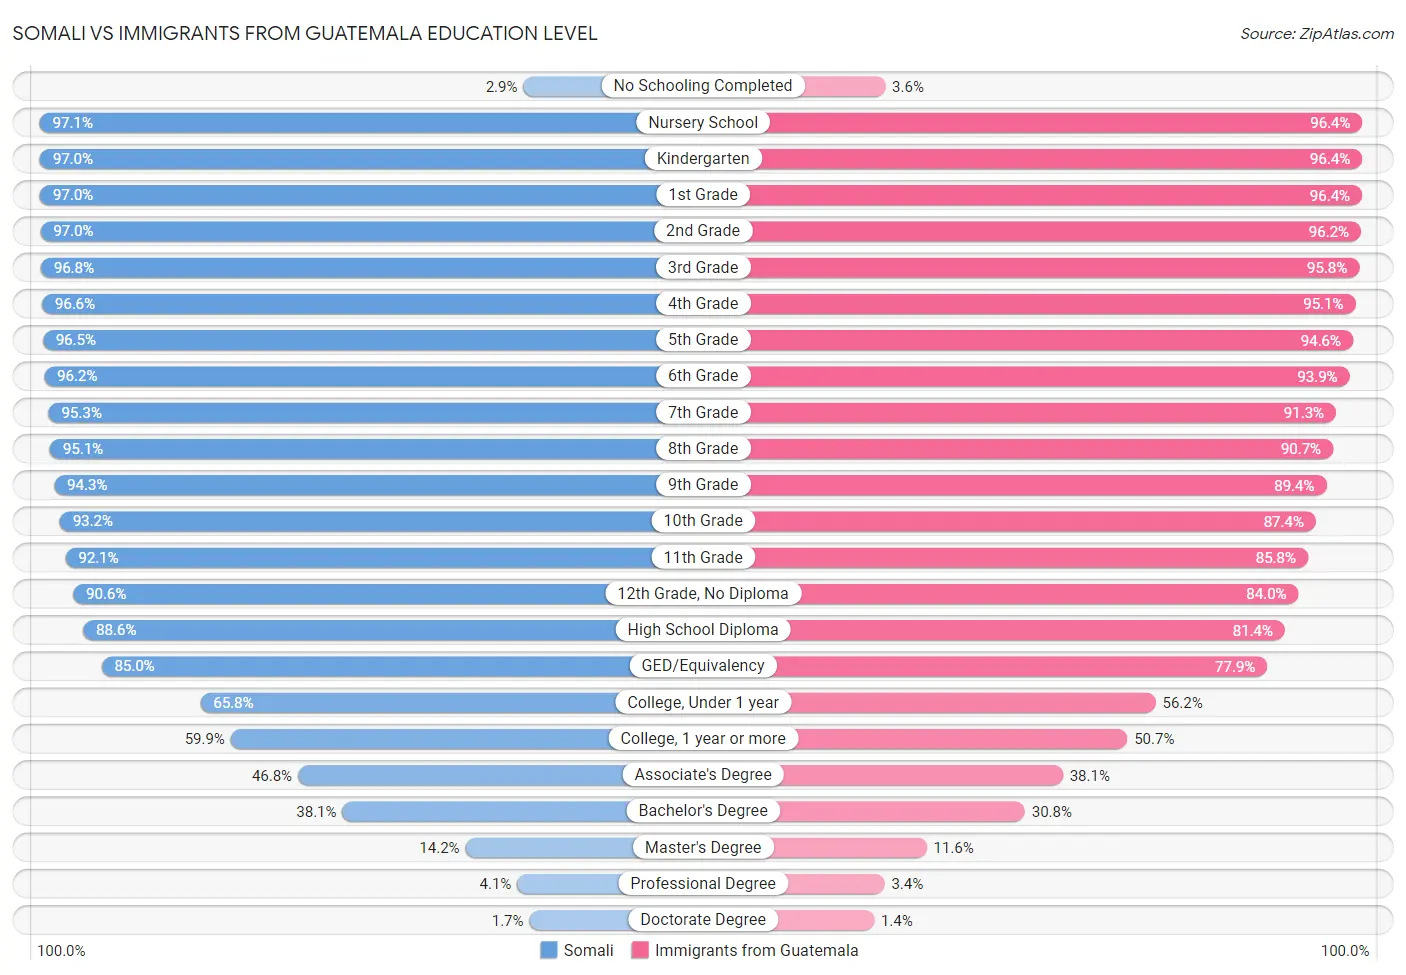 Somali vs Immigrants from Guatemala Education Level